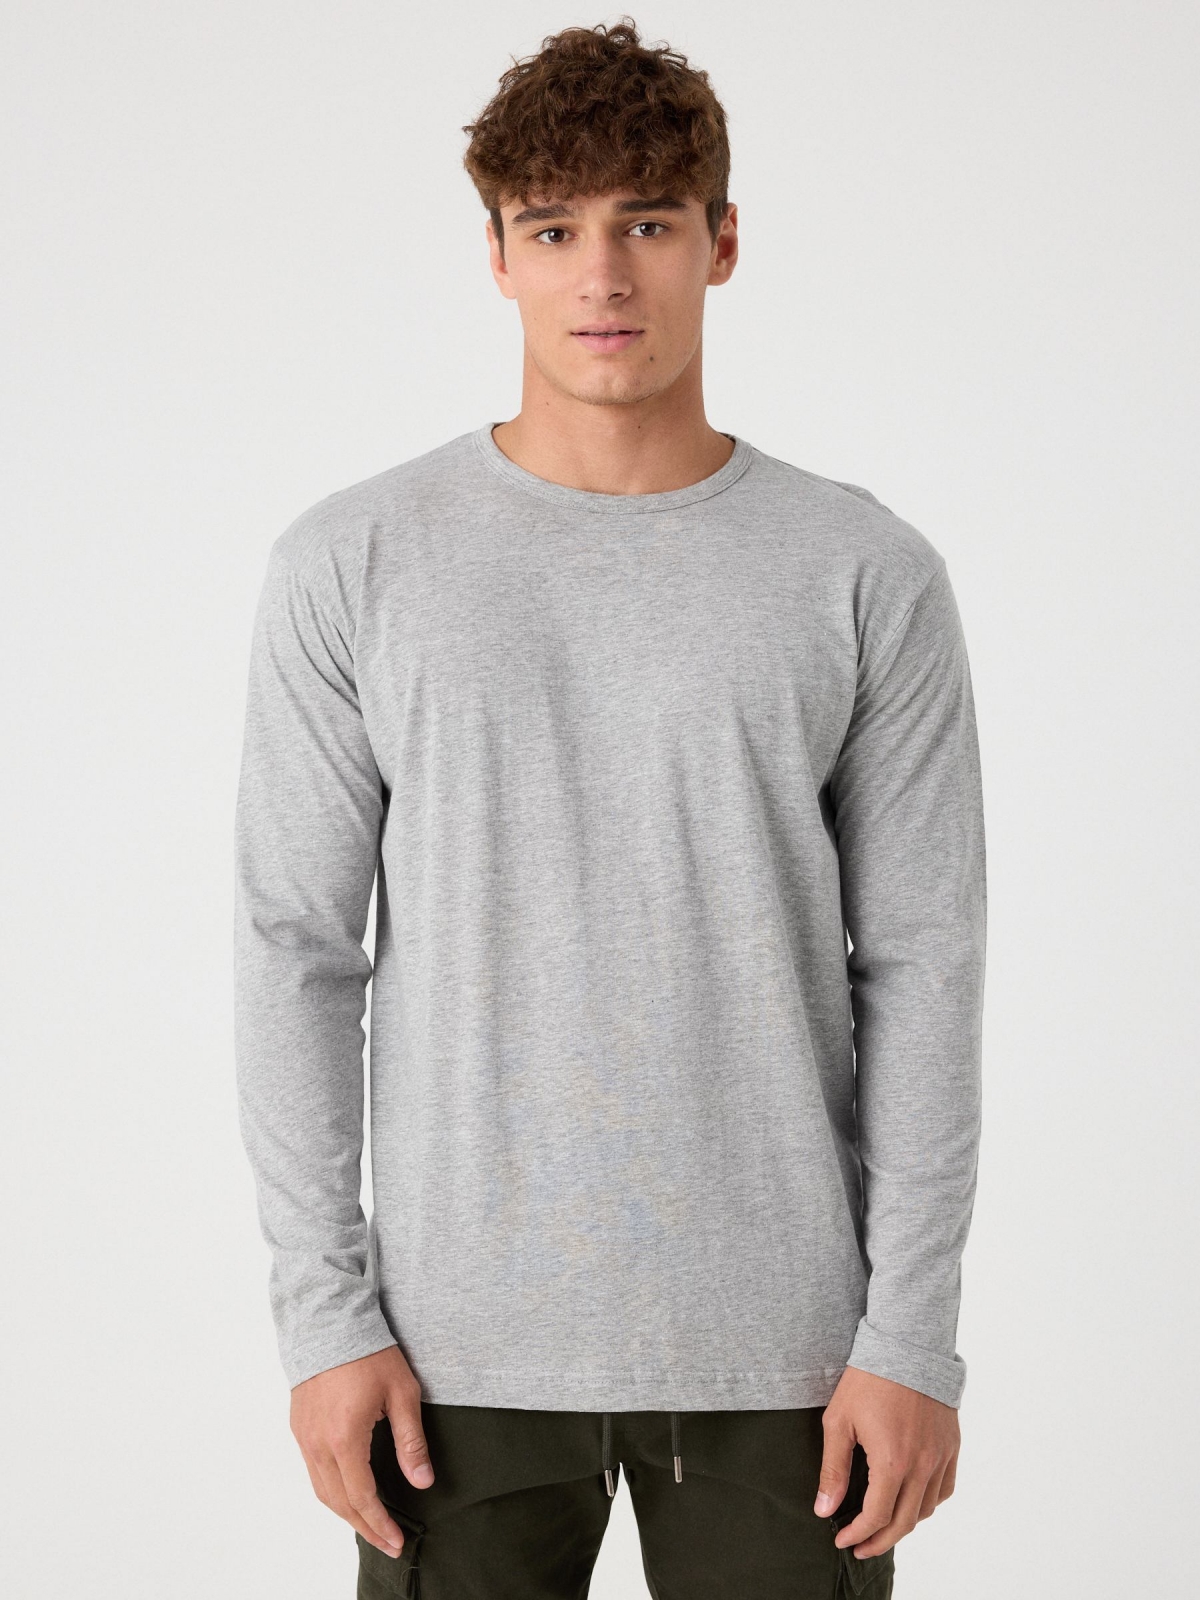 Basic long sleeve t-shirt melange grey middle front view